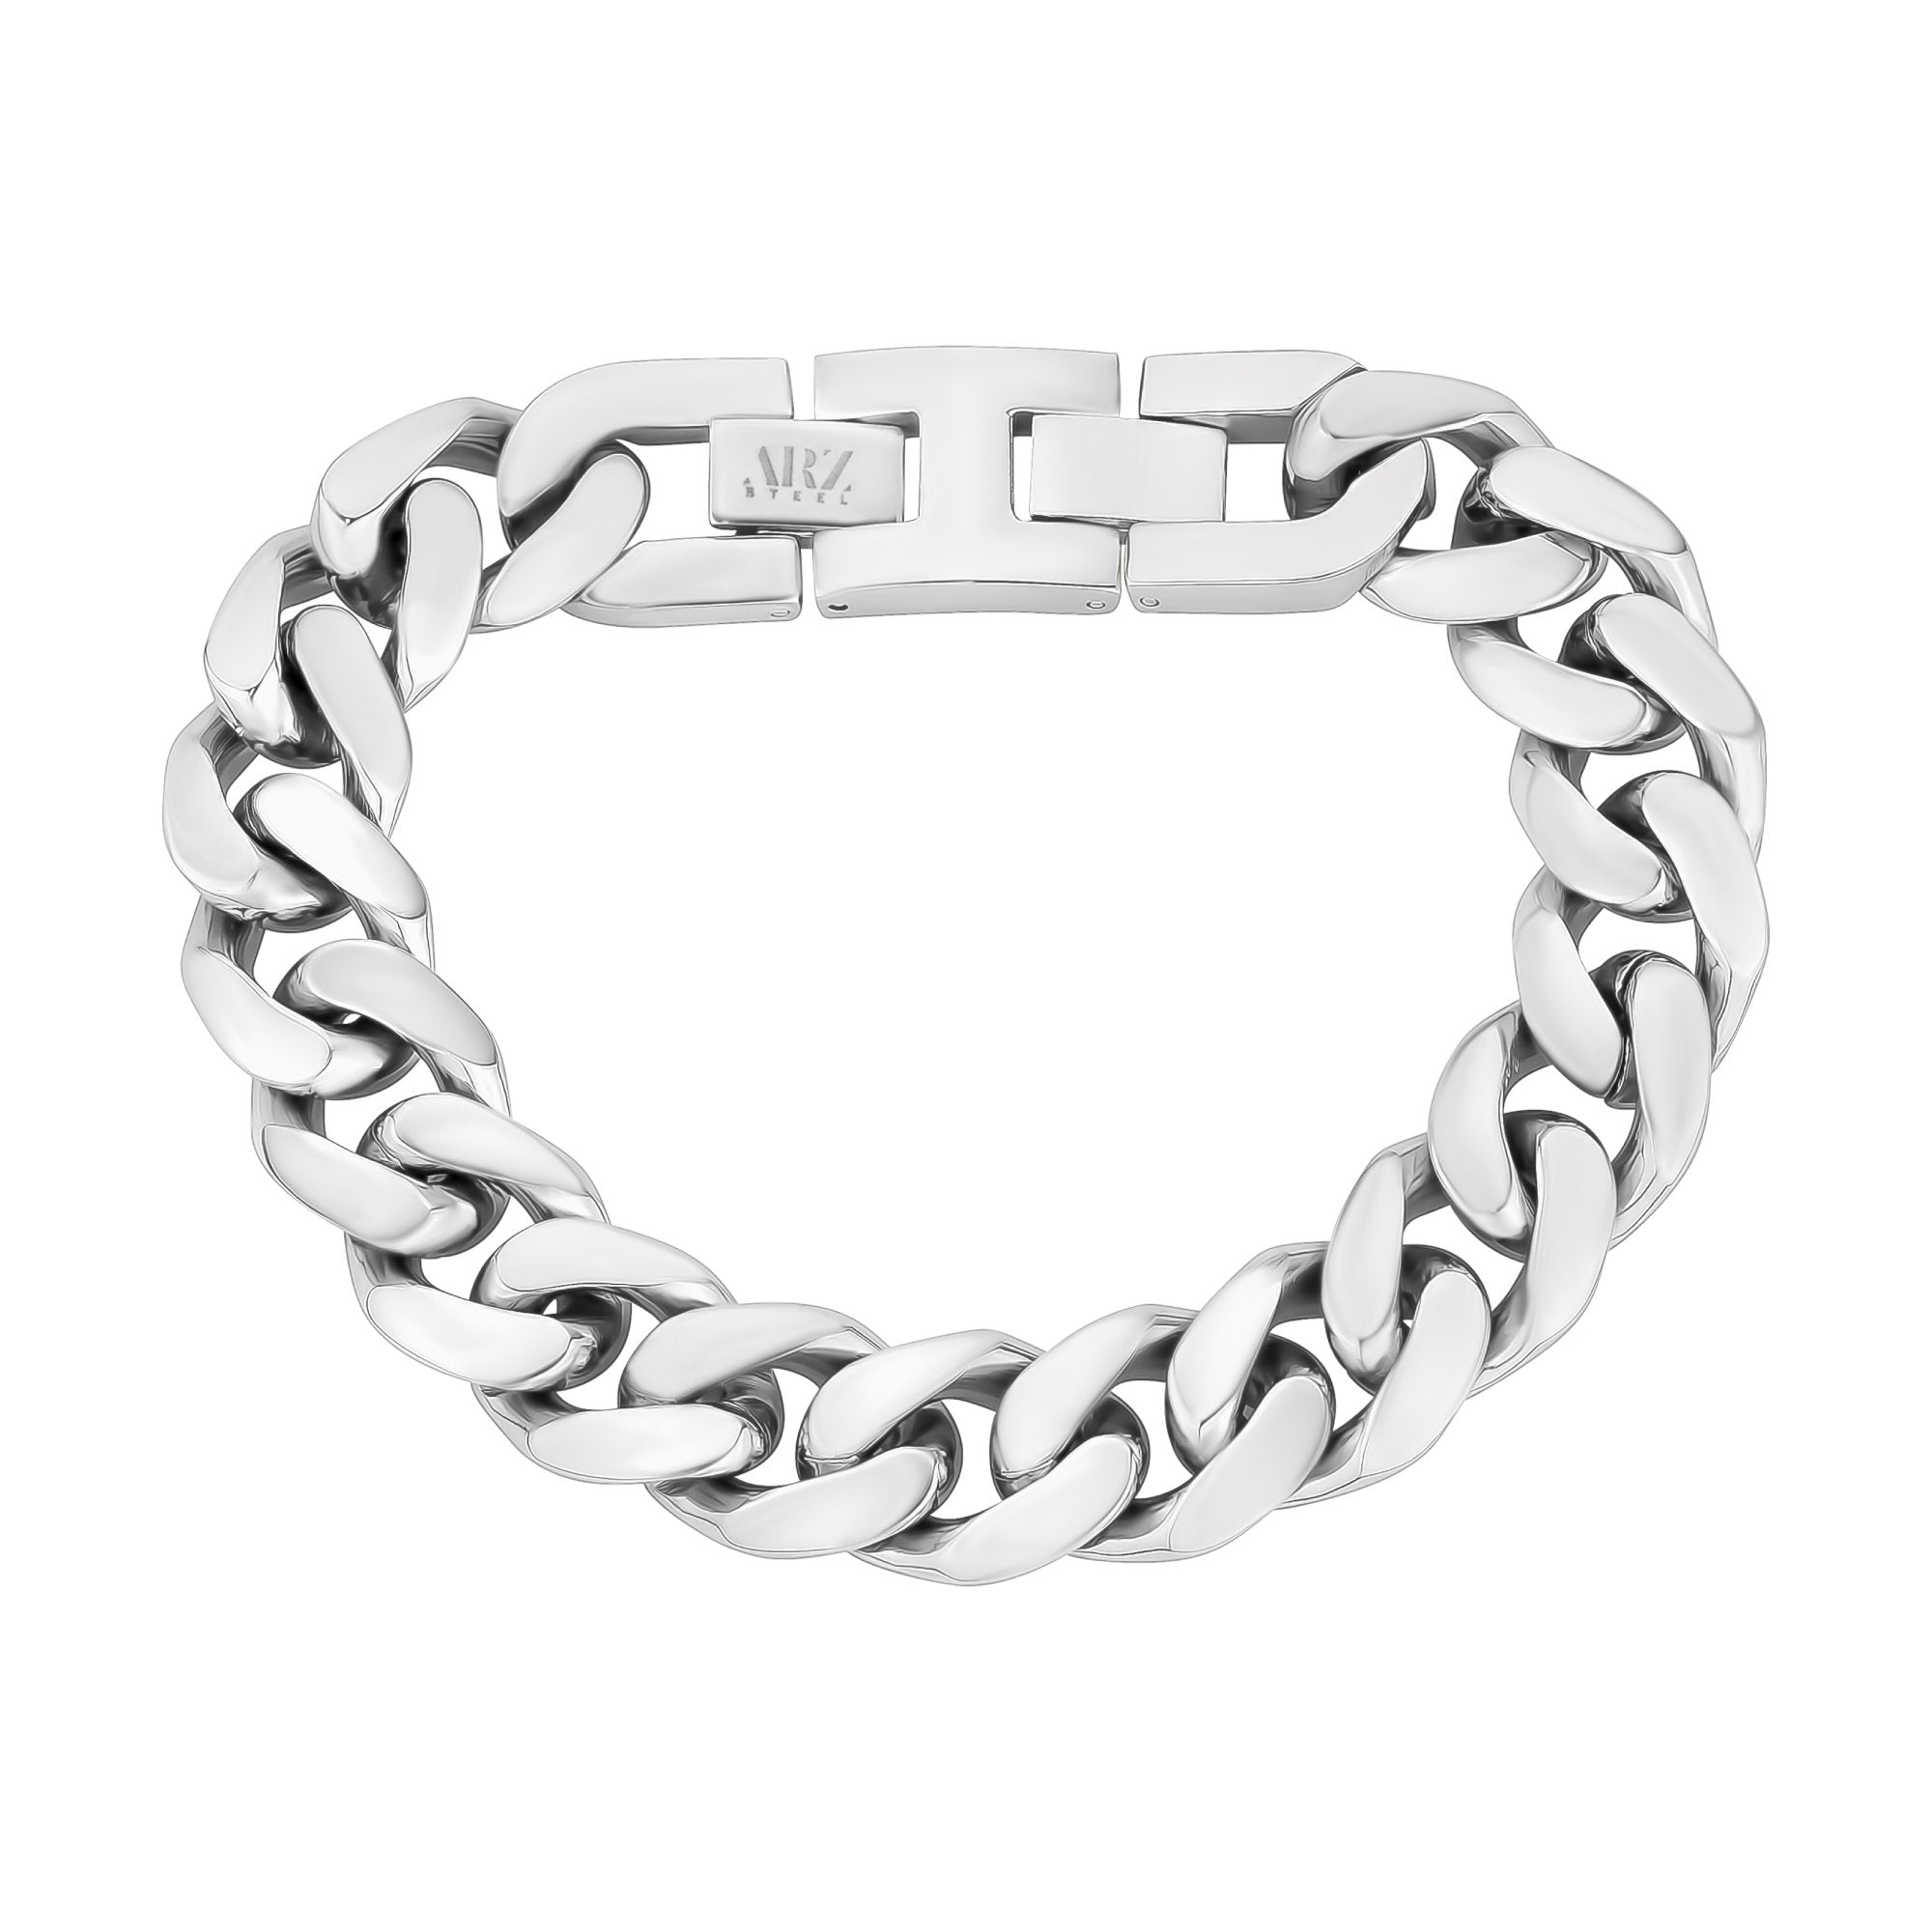 Silver Bracelet Men, Mens Bracelet Chain Rope Link Mens Jewelry, Thin Silver  Bracelet, Silver Bracelet Chains for Man by Twistedpendant - Etsy